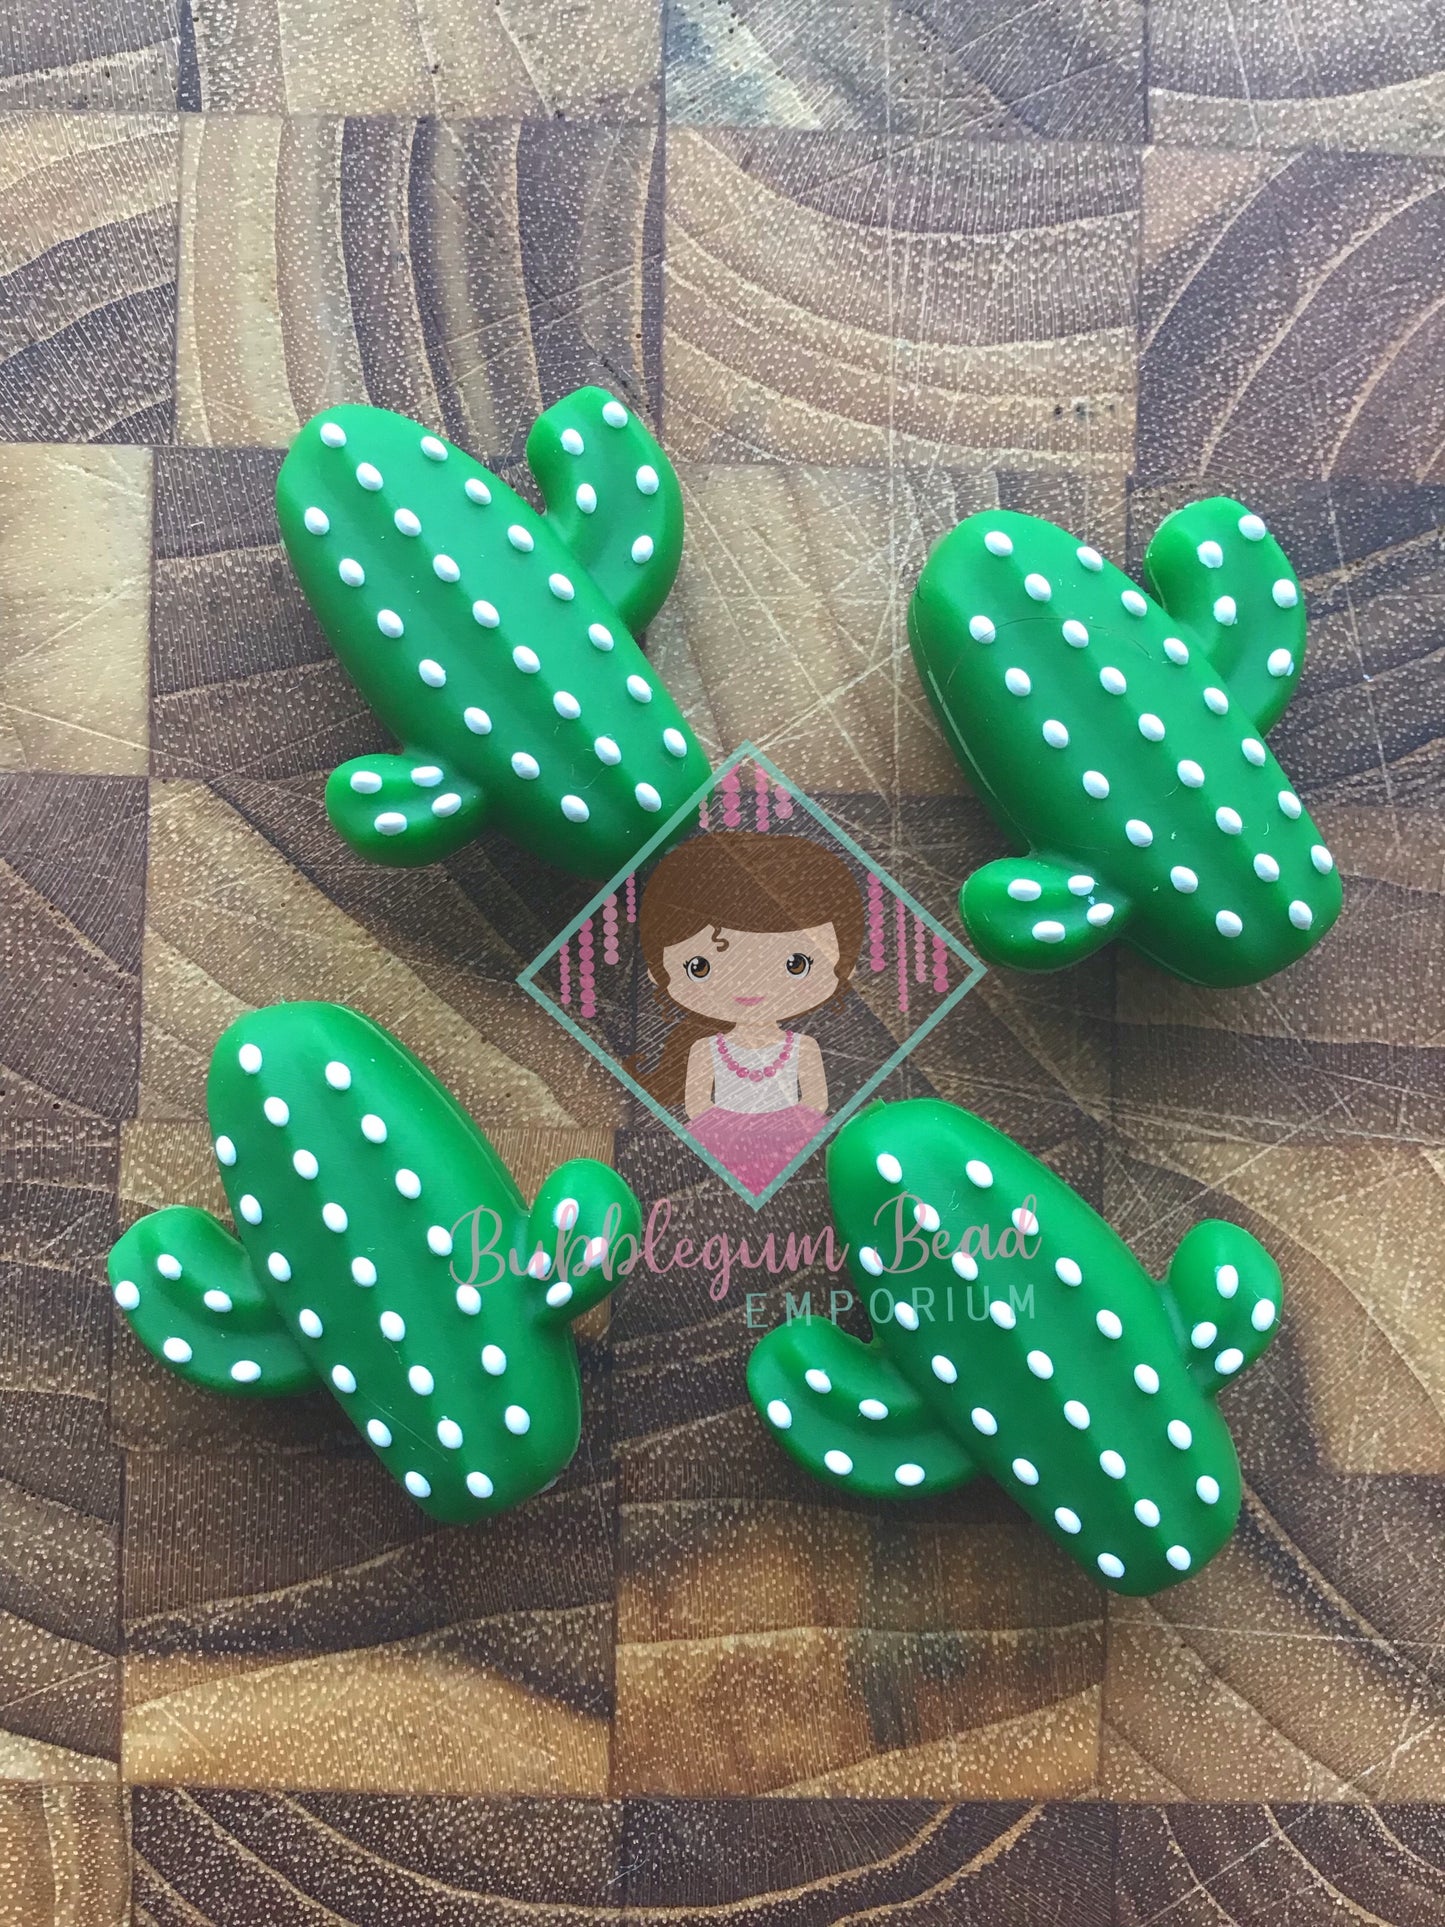 Cactus Charm Beads